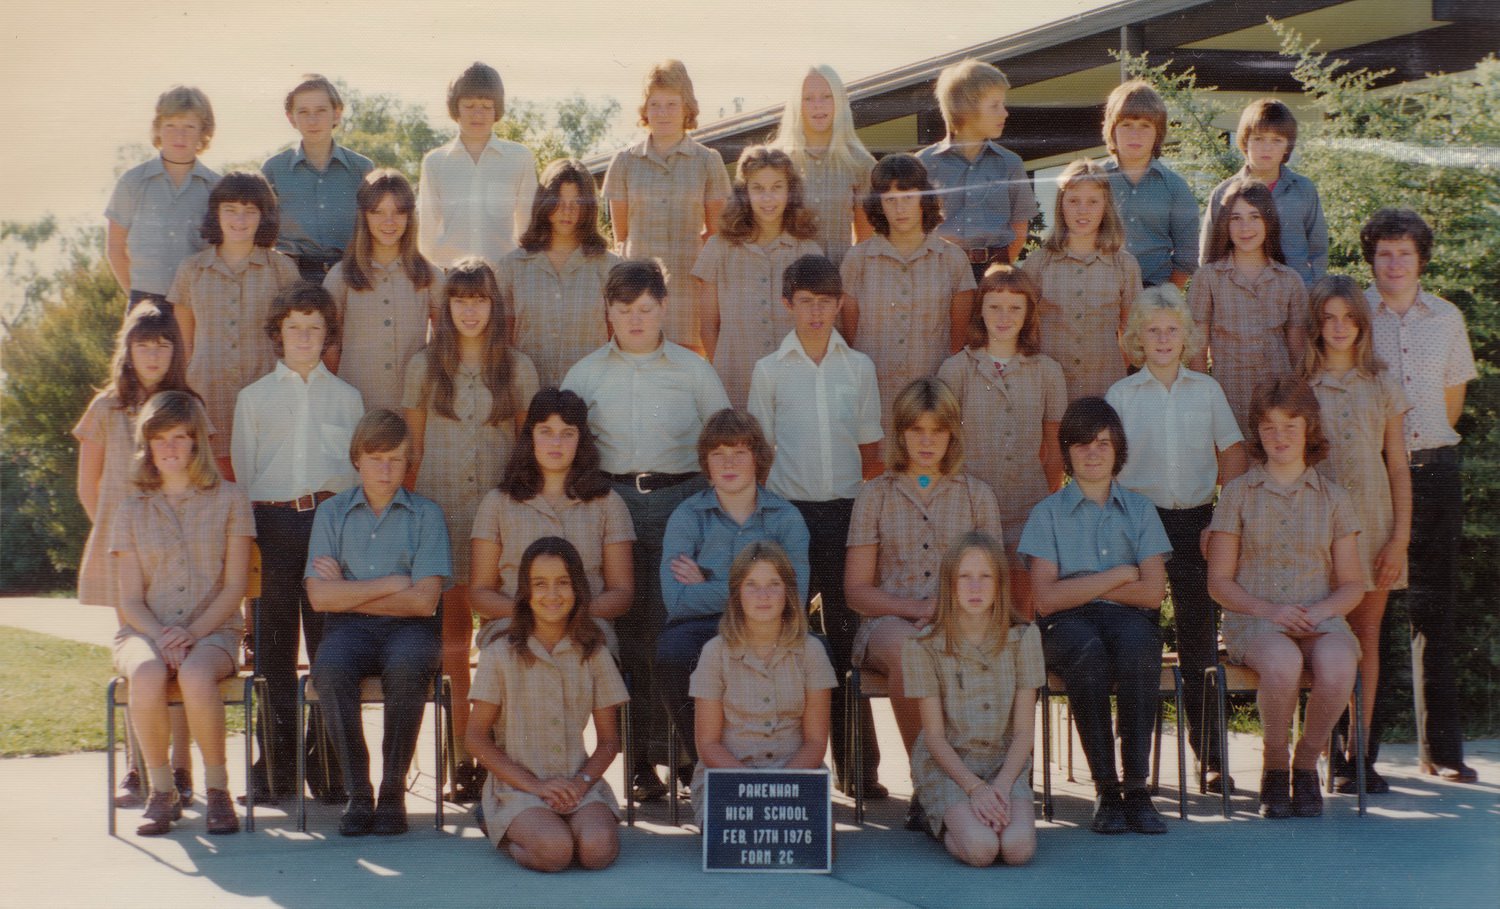 1976 Year 8 Pakenham High School. Front: ?, ?, ?
Row 2: ?, Jeff Crawford, Renate Vicum, Andrew Ewenson, Angela ?, Glenn Eaton, ?
Row 3:
Back: